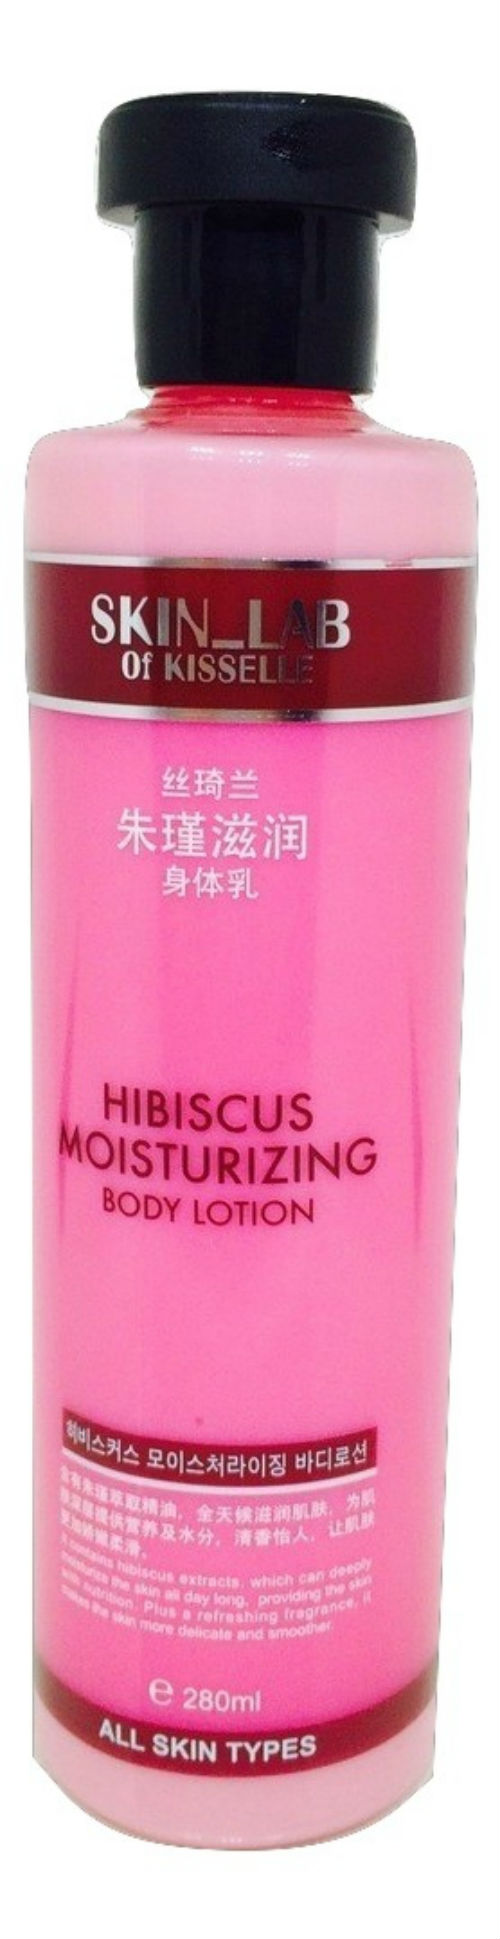 Hibiscus Moisturizing Body Lotion – 280ml